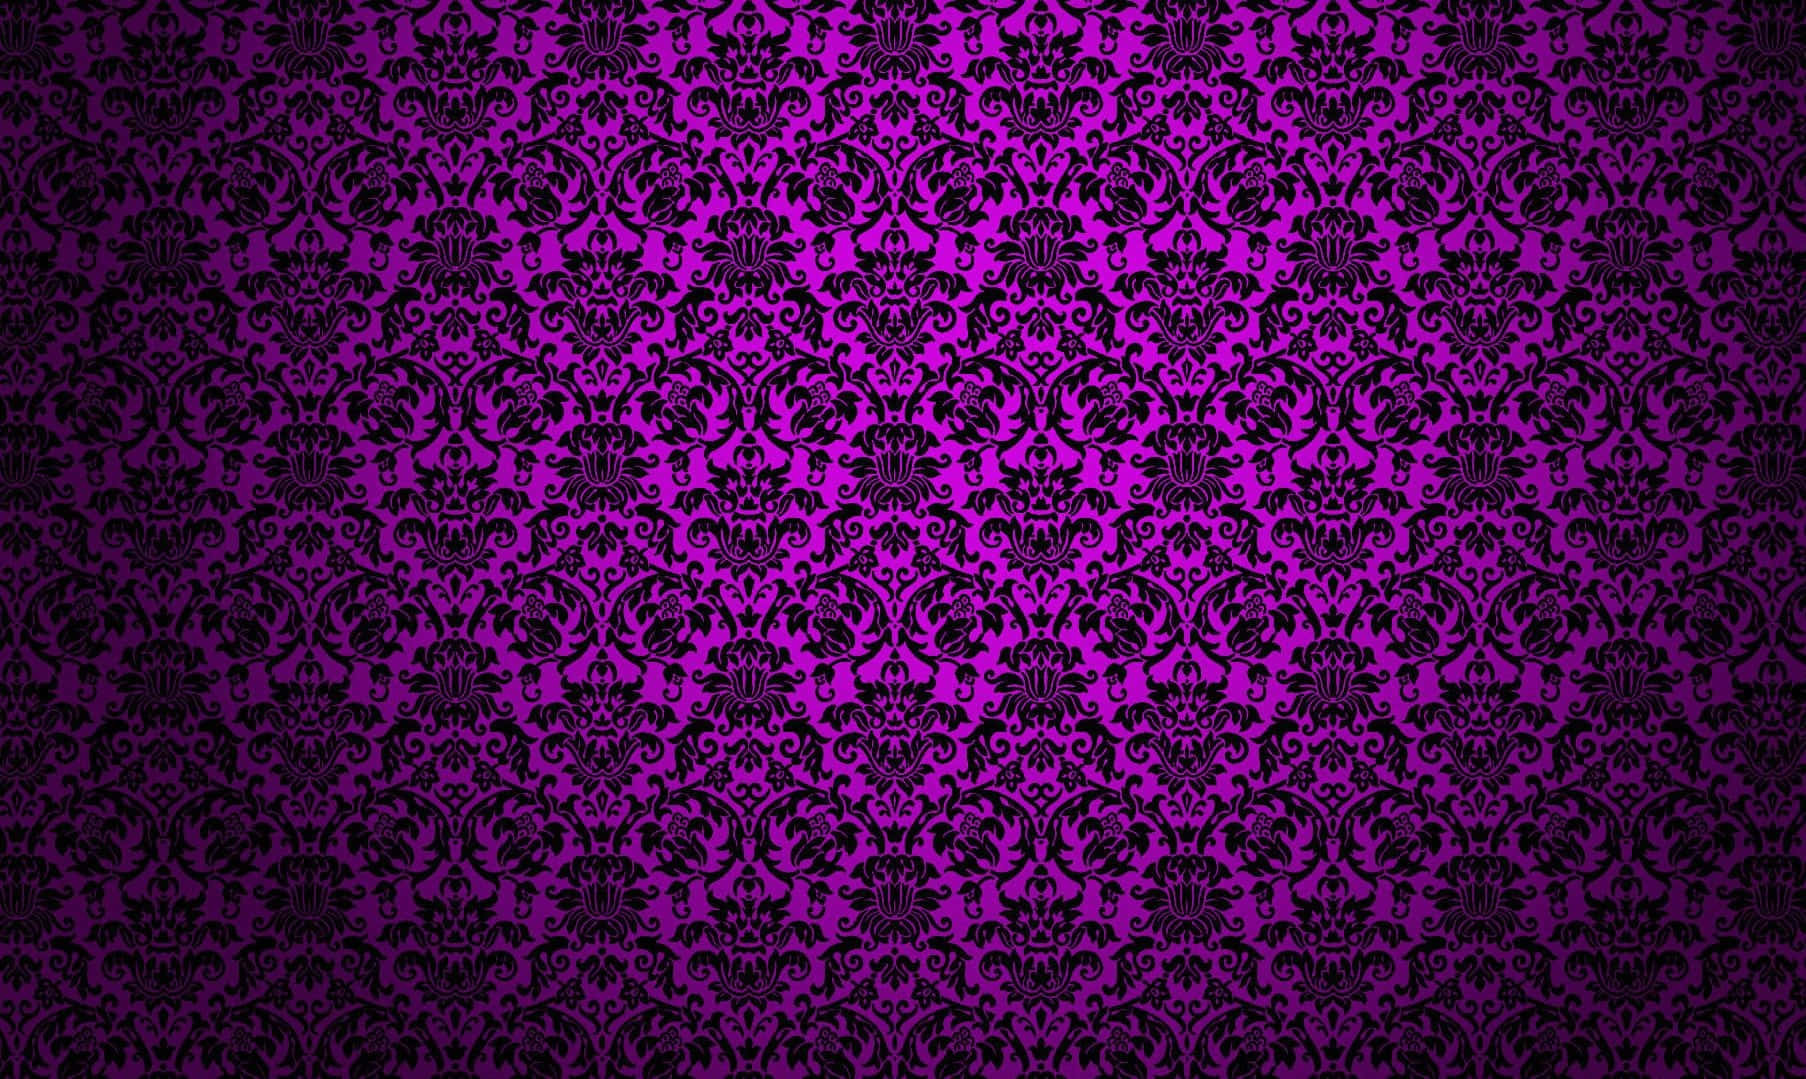 purple and black damask background